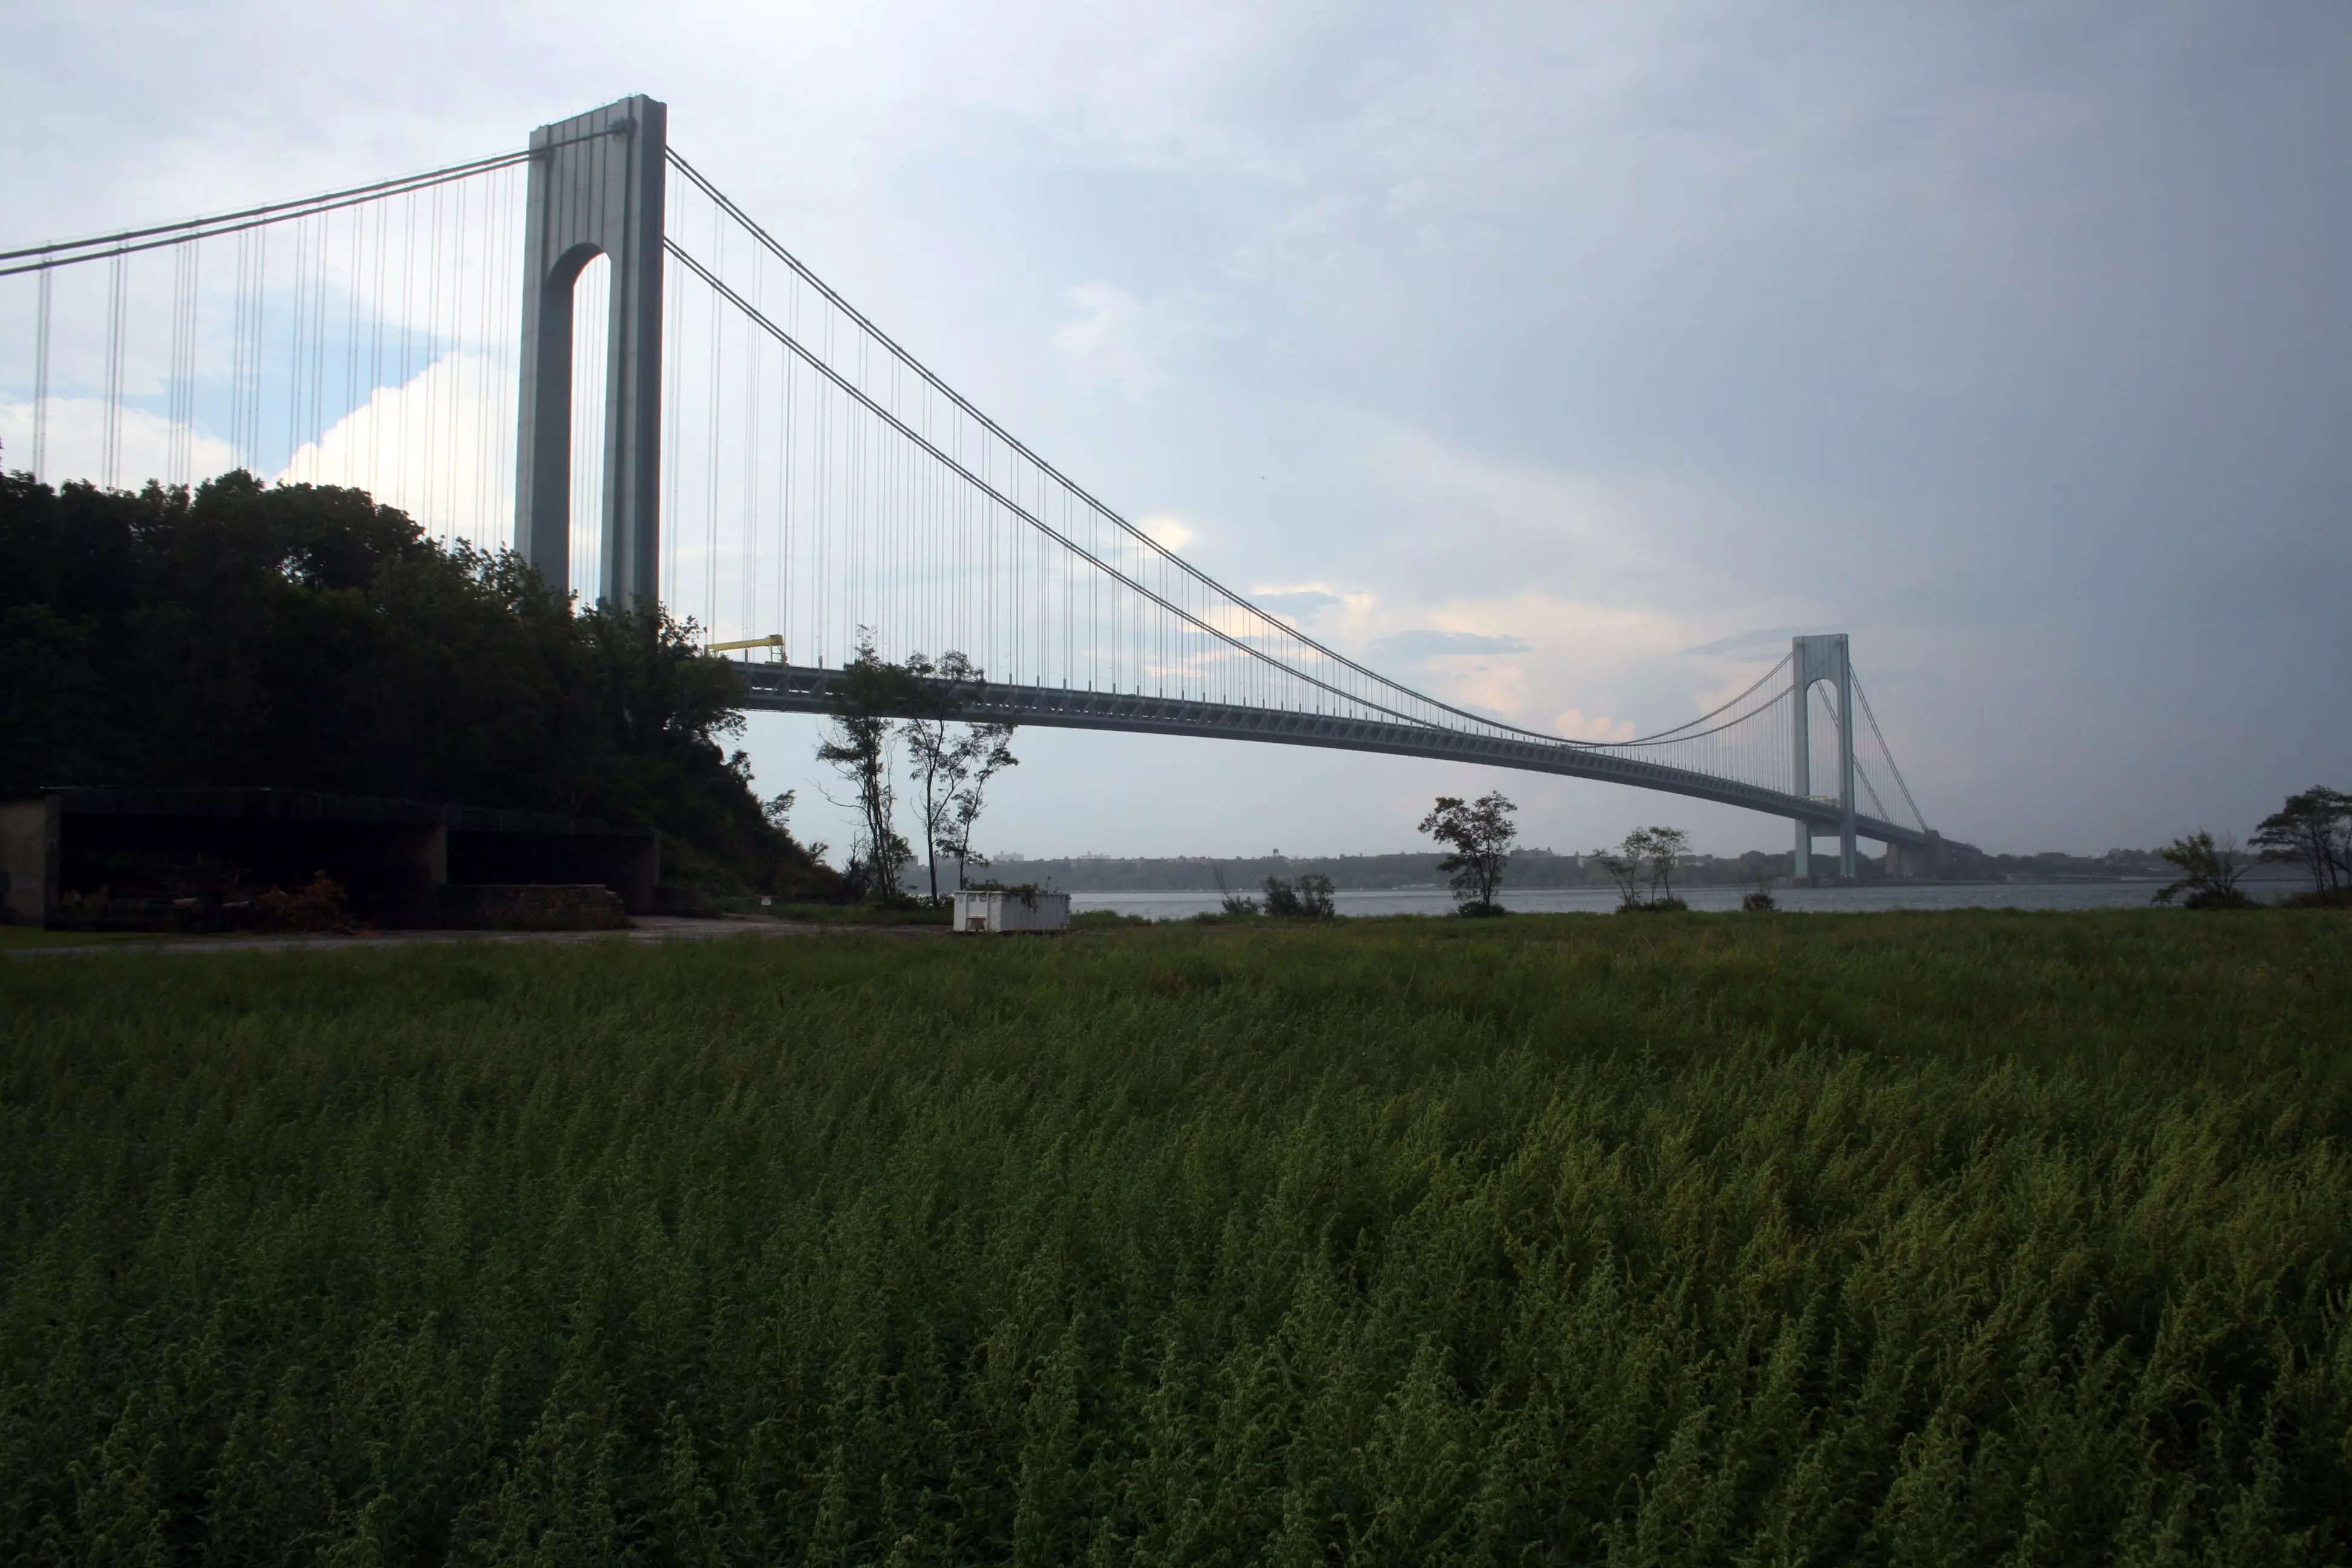 Ship loses propulsion near New York's Verrazzano Bridge just days after ...